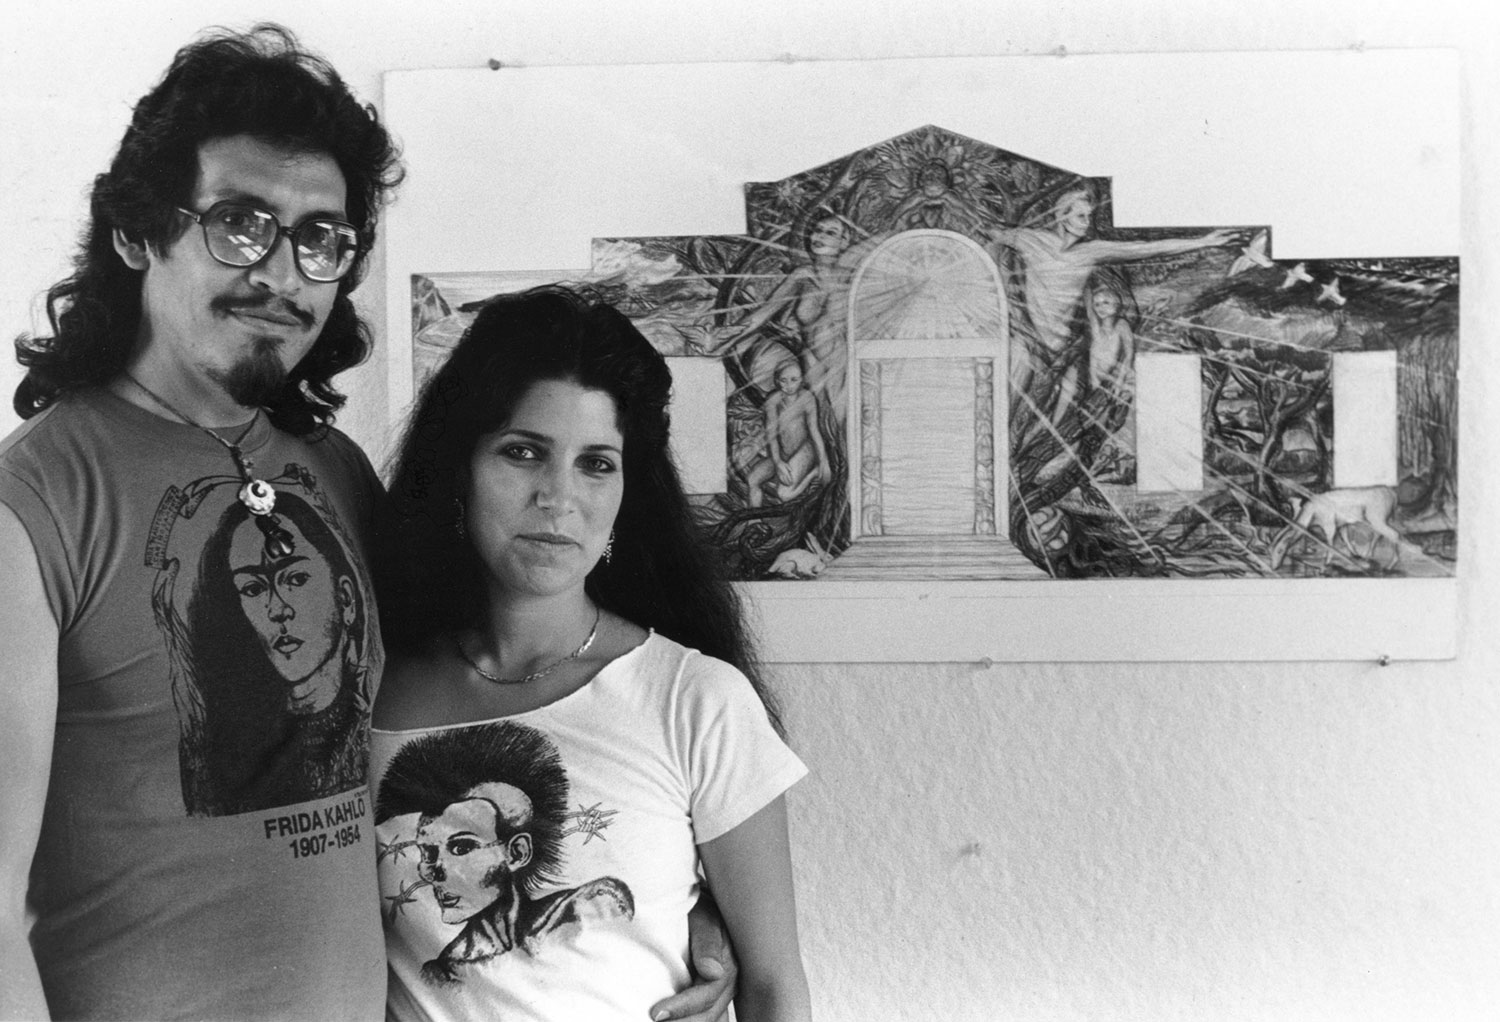  Juana Alicia and E. Montoya, “New World Tree” mural sketch 